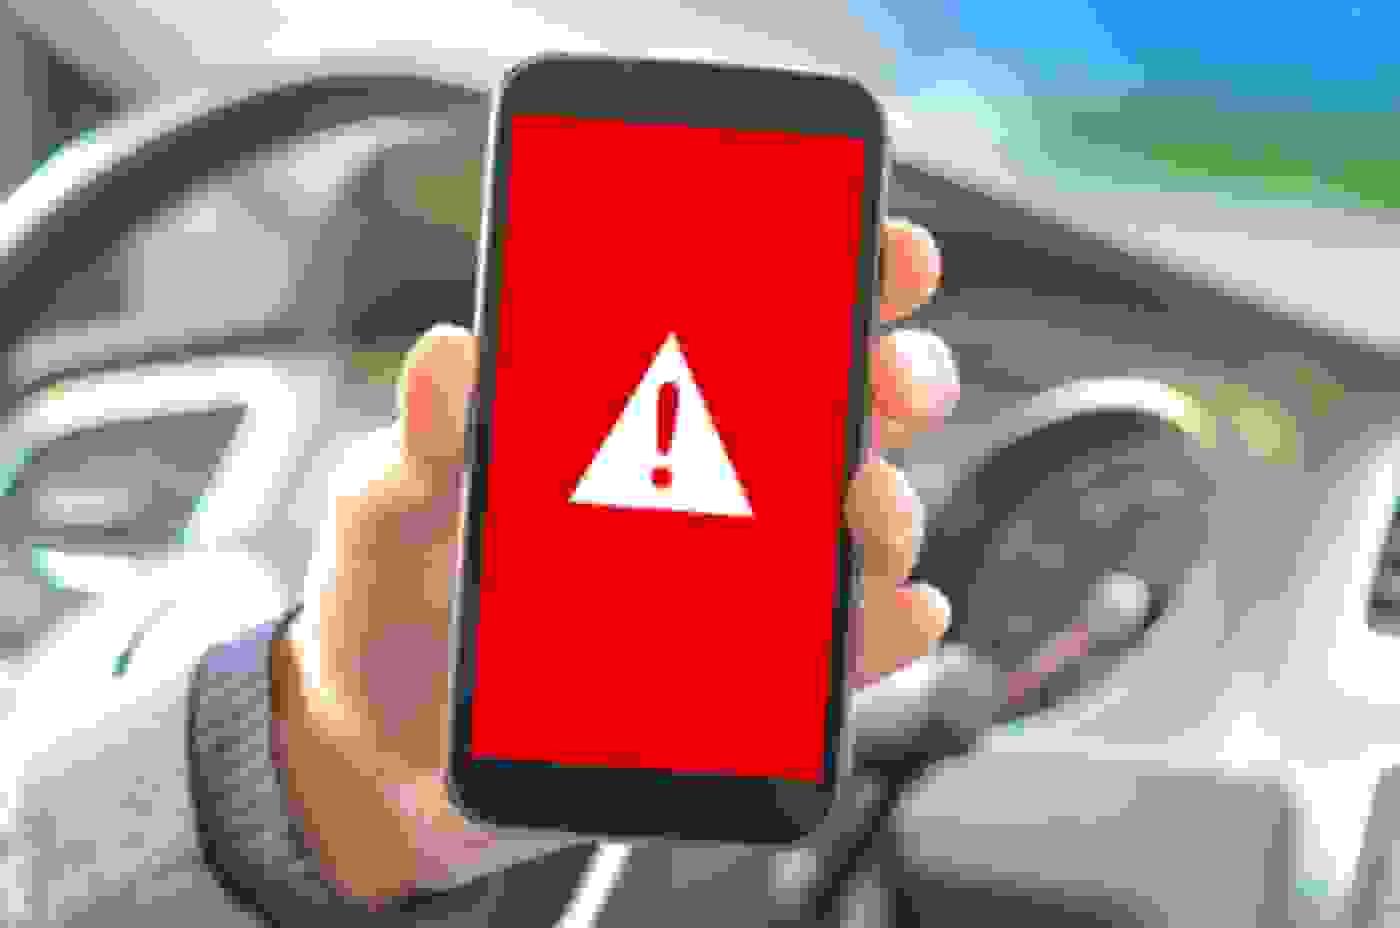 Drivers Warned About Emergency Alert Siren in April